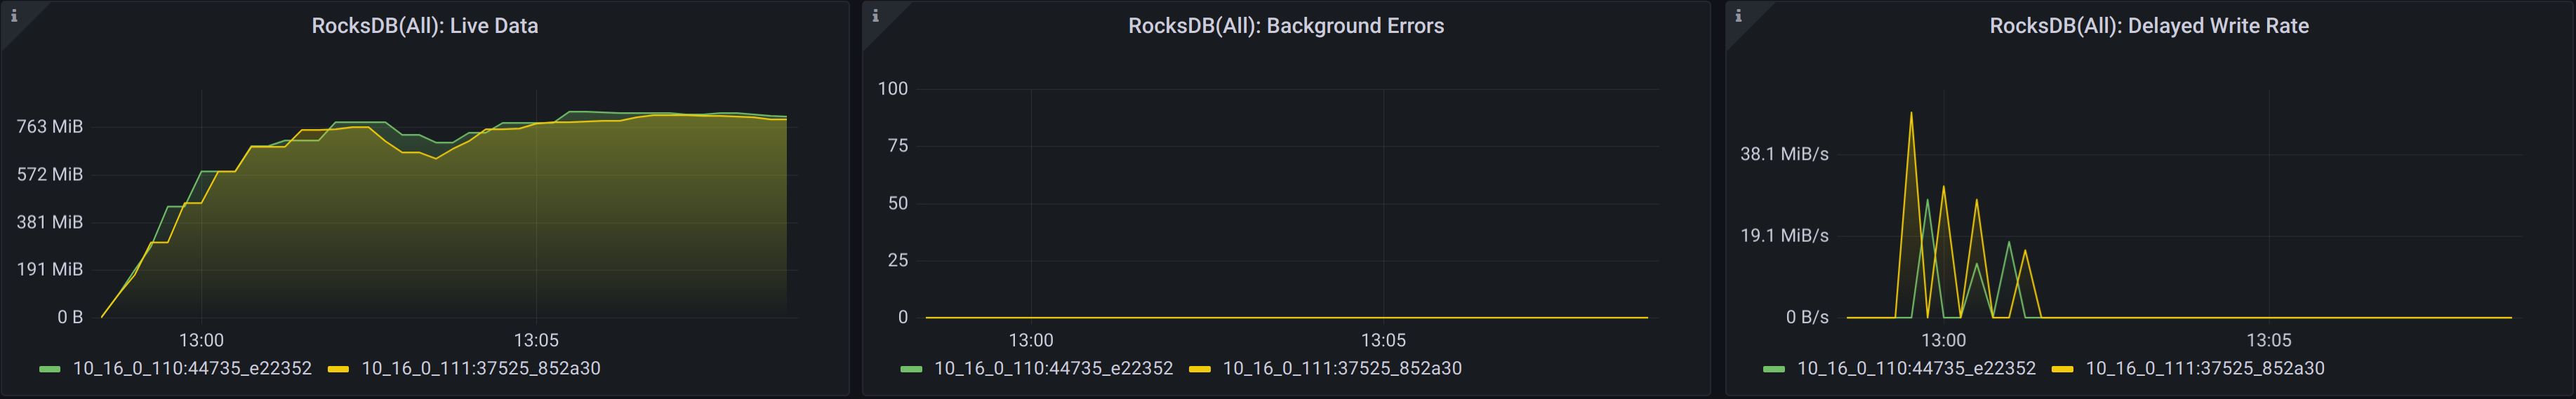 Flink troubleshooting- RocksDB data size, errors, and write stalls